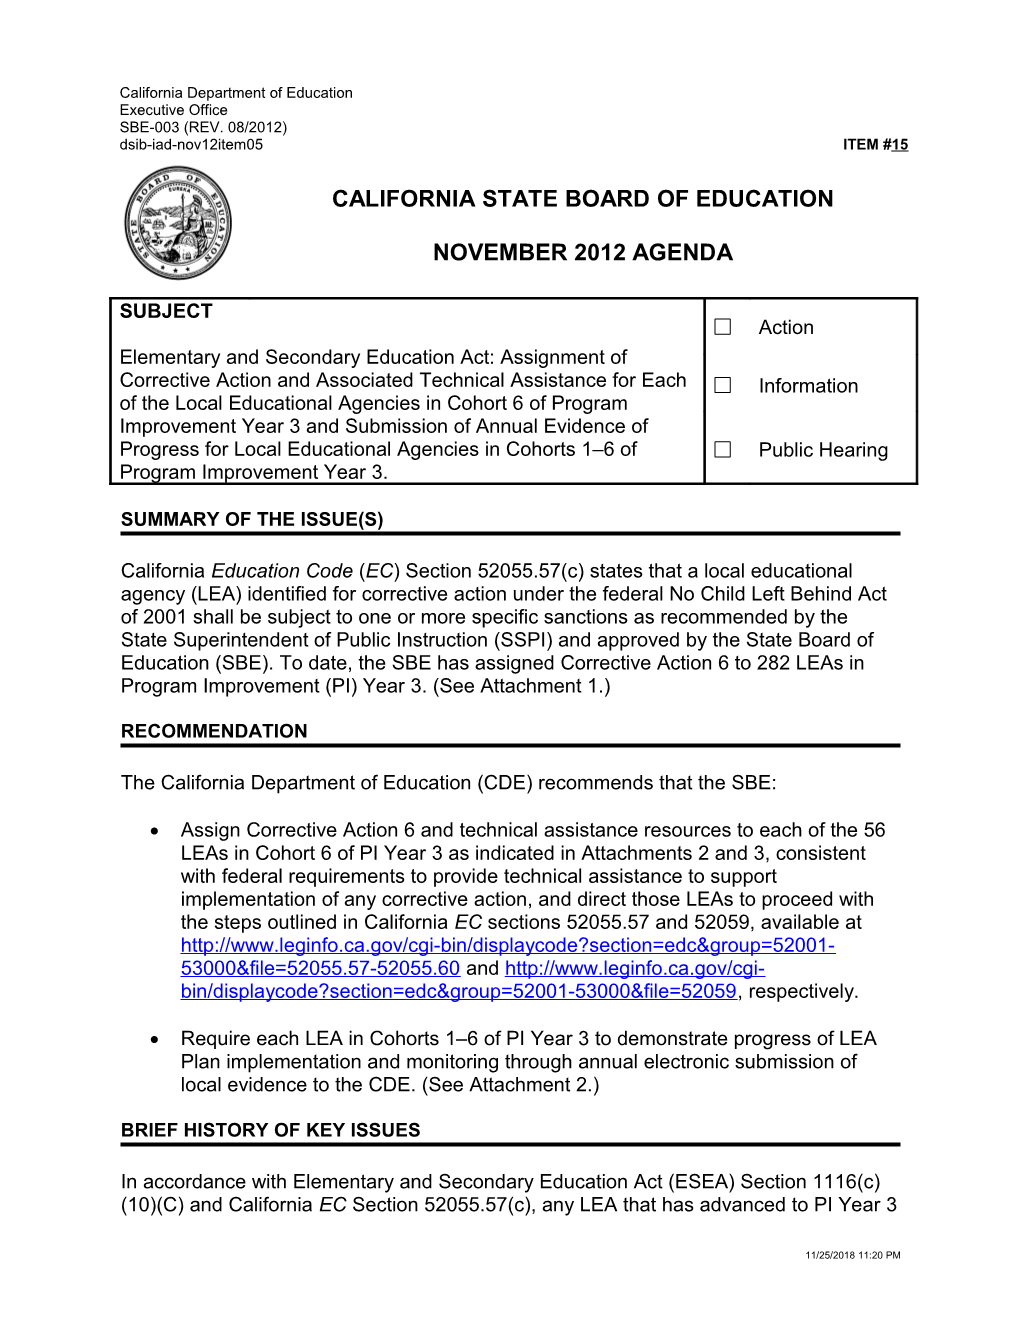 November 2012 Agenda Item 15 - Meeting Agendas (CA State Board of Education)